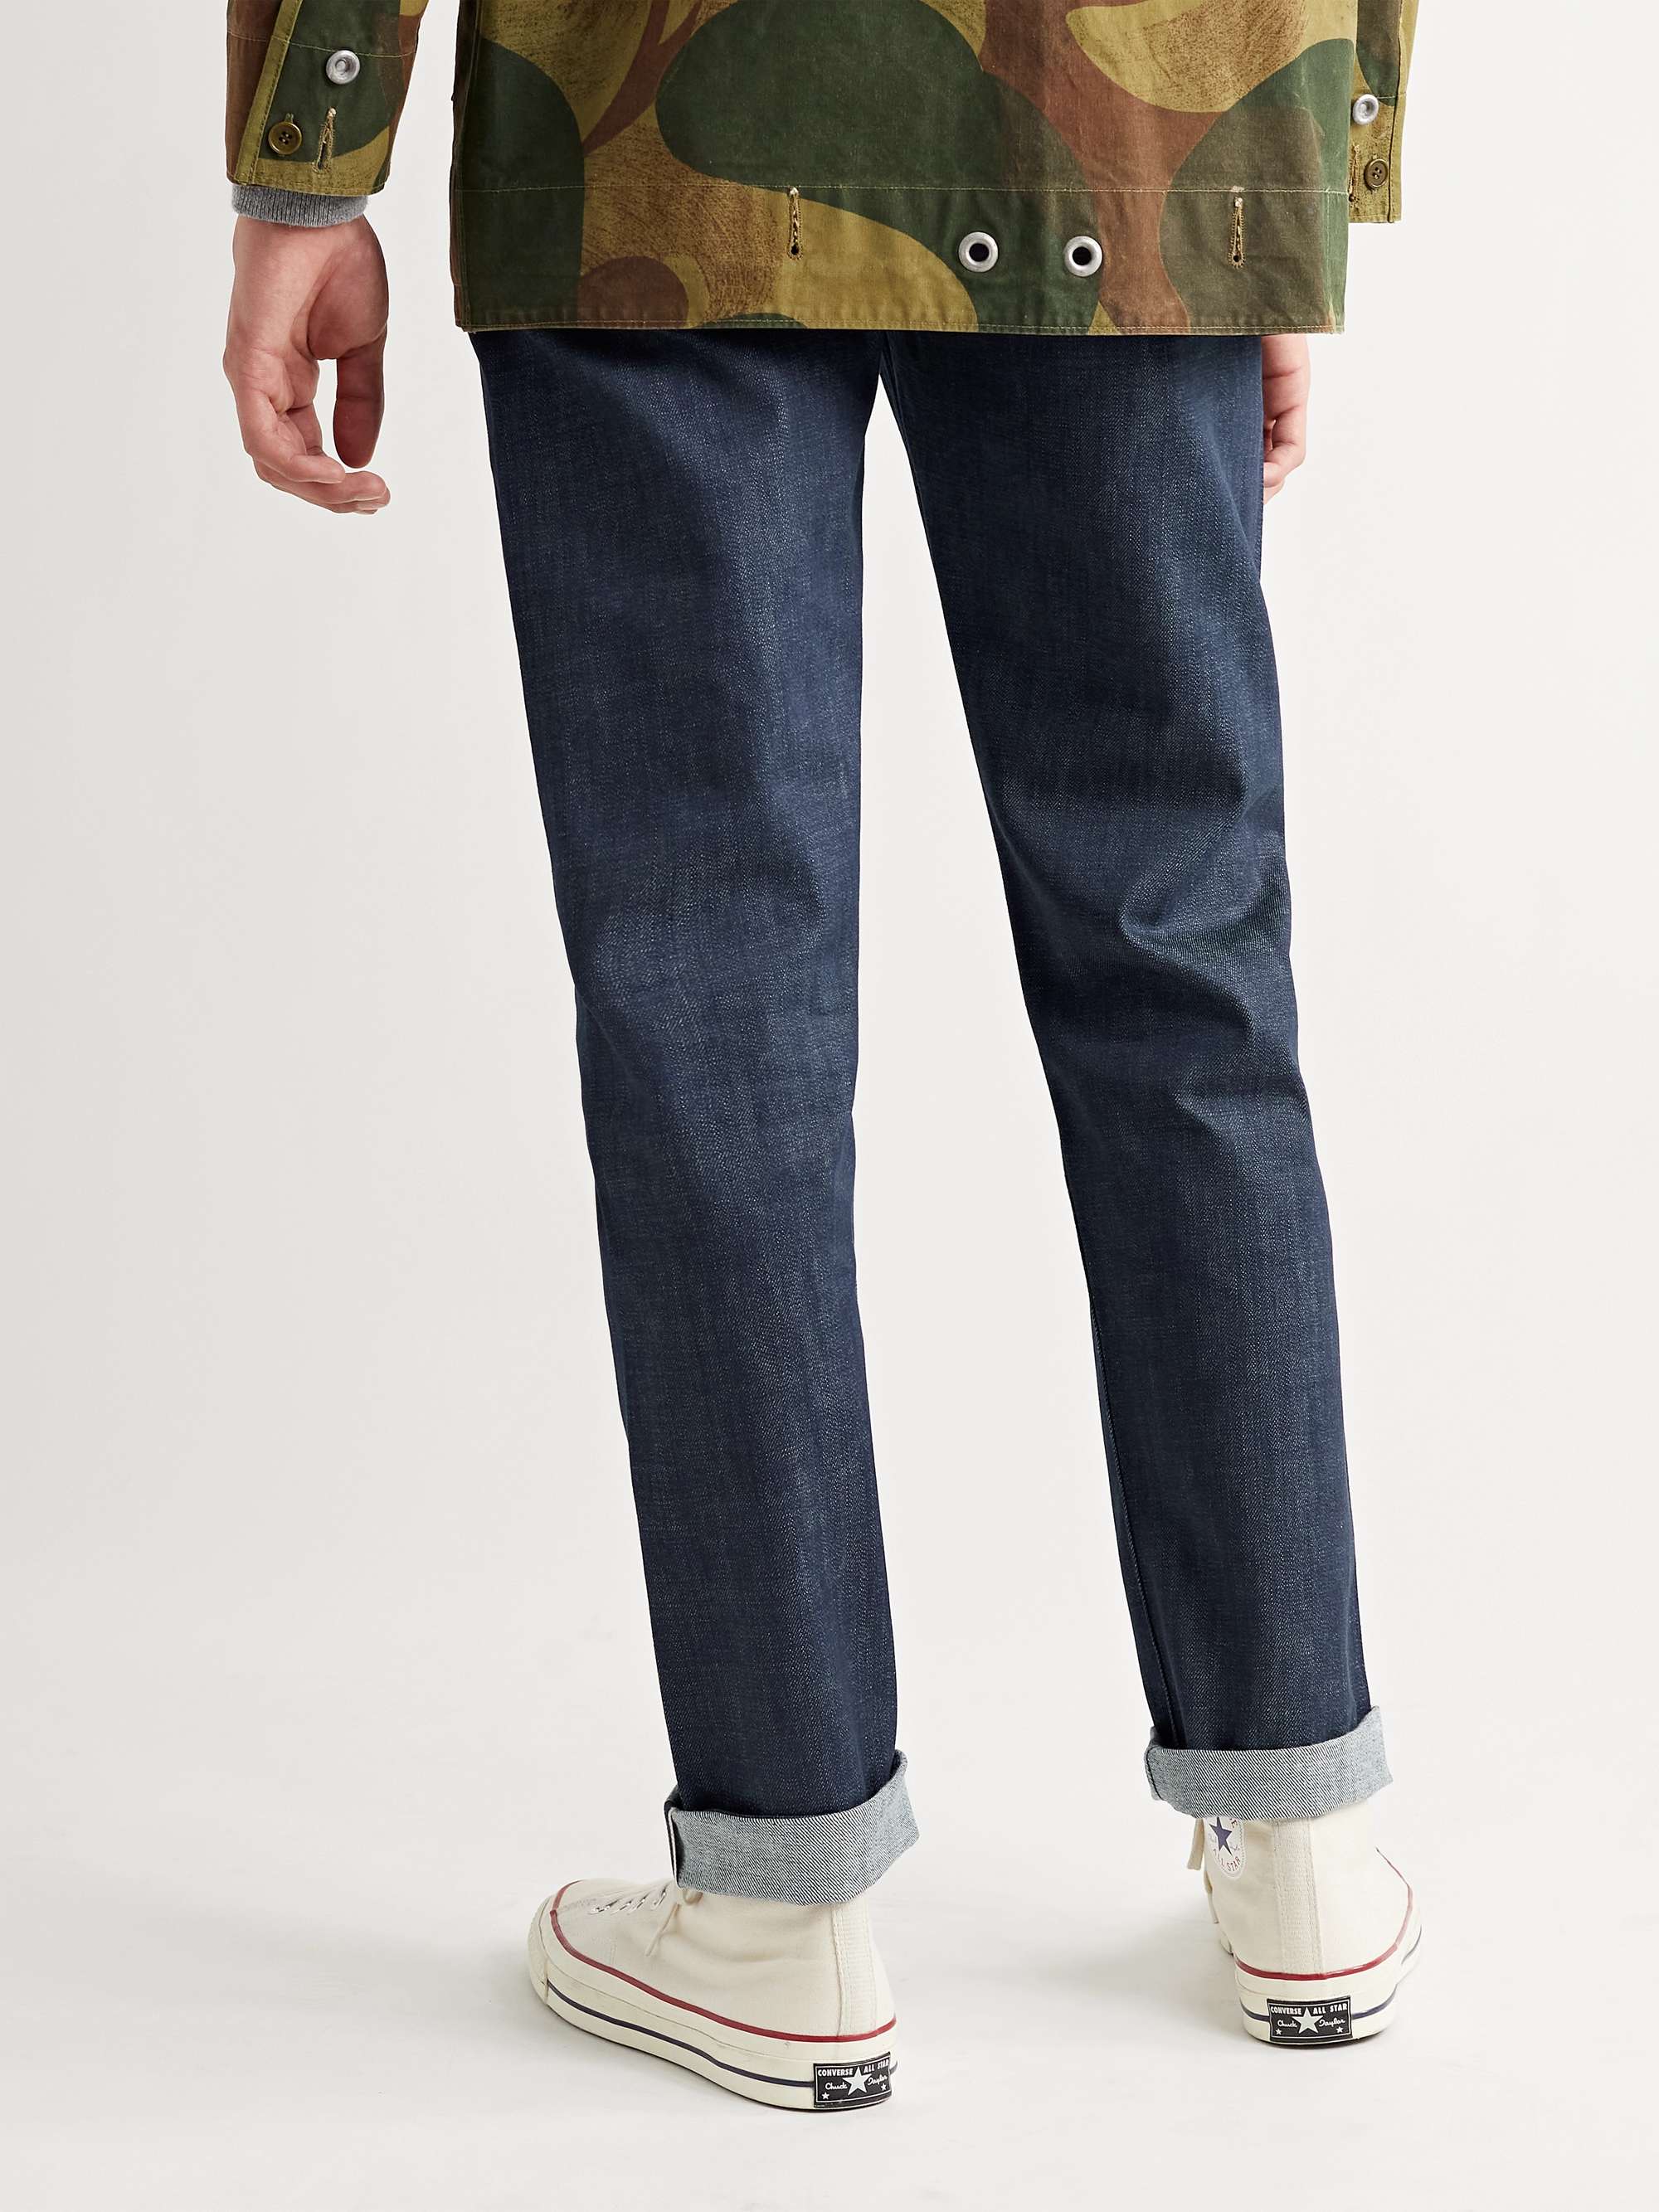 BLACKHORSE LANE ATELIERS W12 Slim-Fit Indigo-Dyed Selvedge Jeans